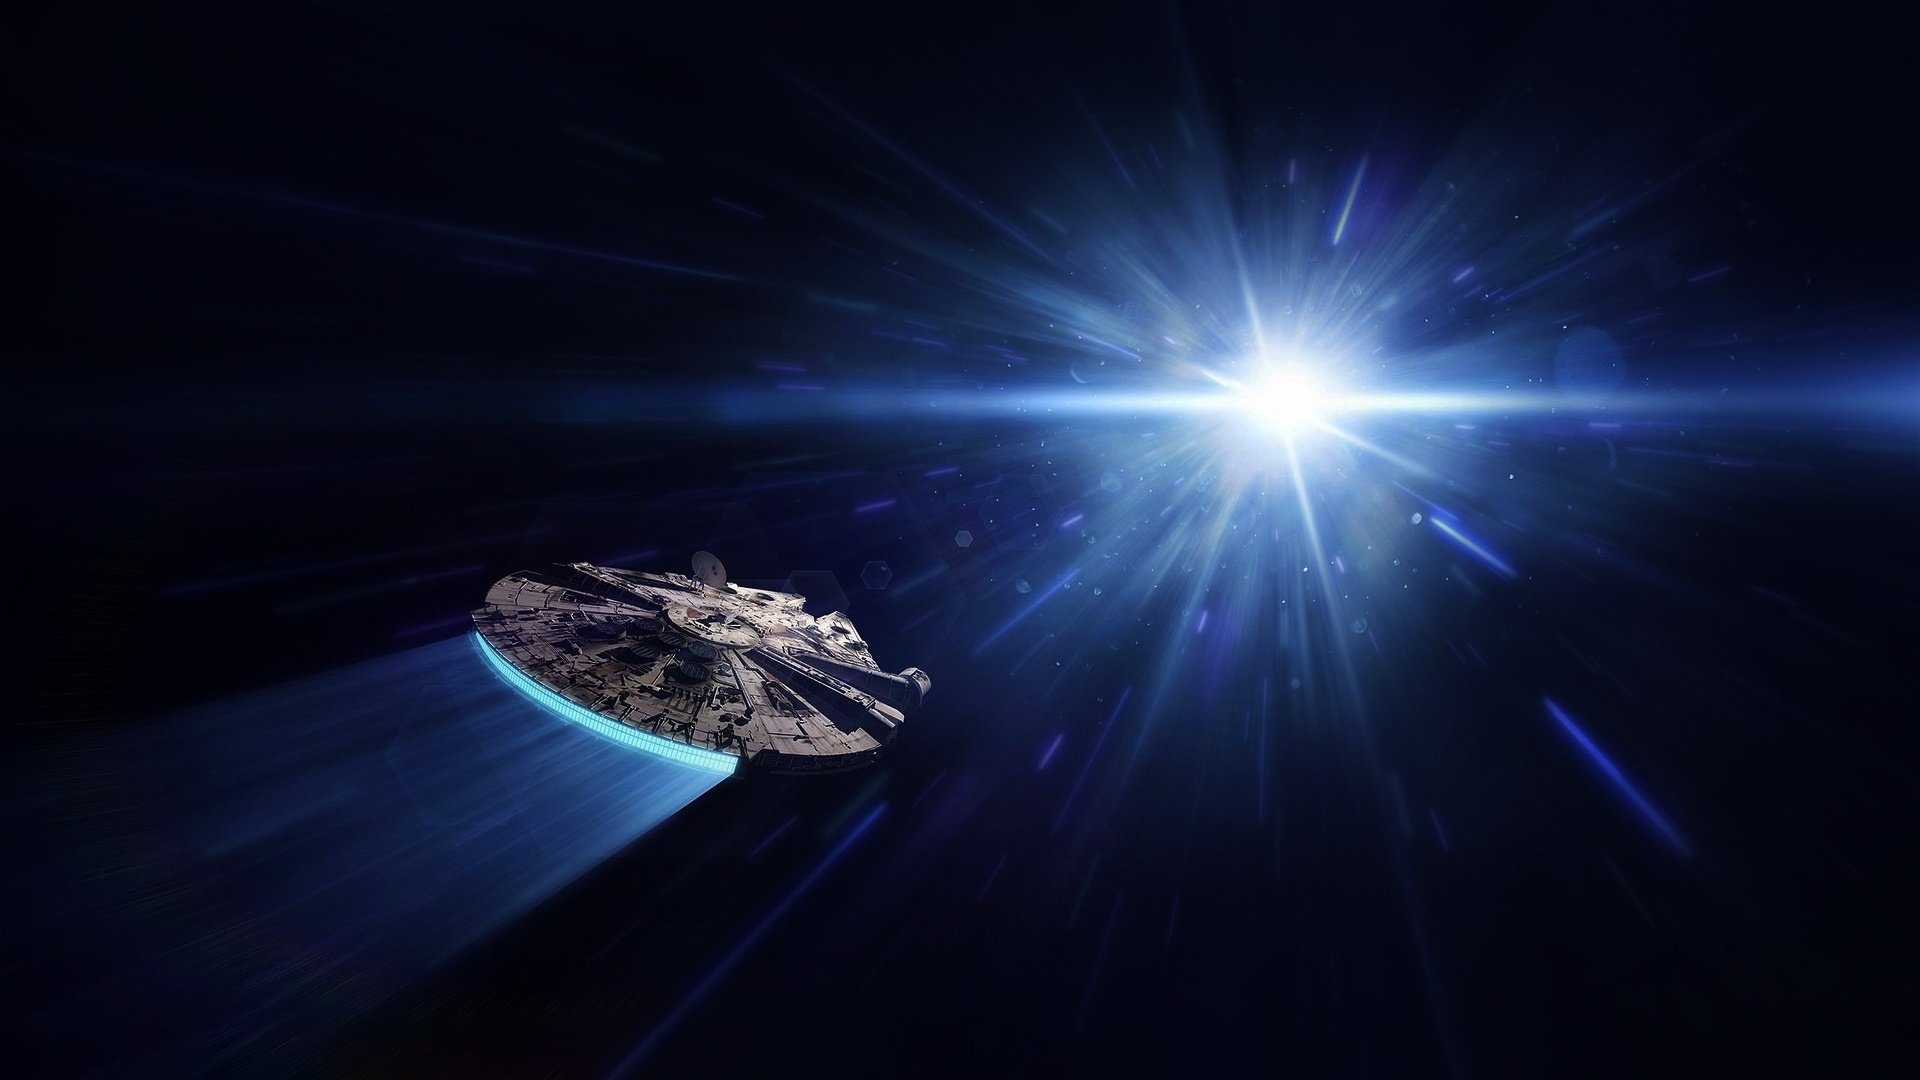 Millennium Falcon entering hyperspace, HD wallpaper, Star Wars spaceship, Epic image, 1920x1080 Full HD Desktop